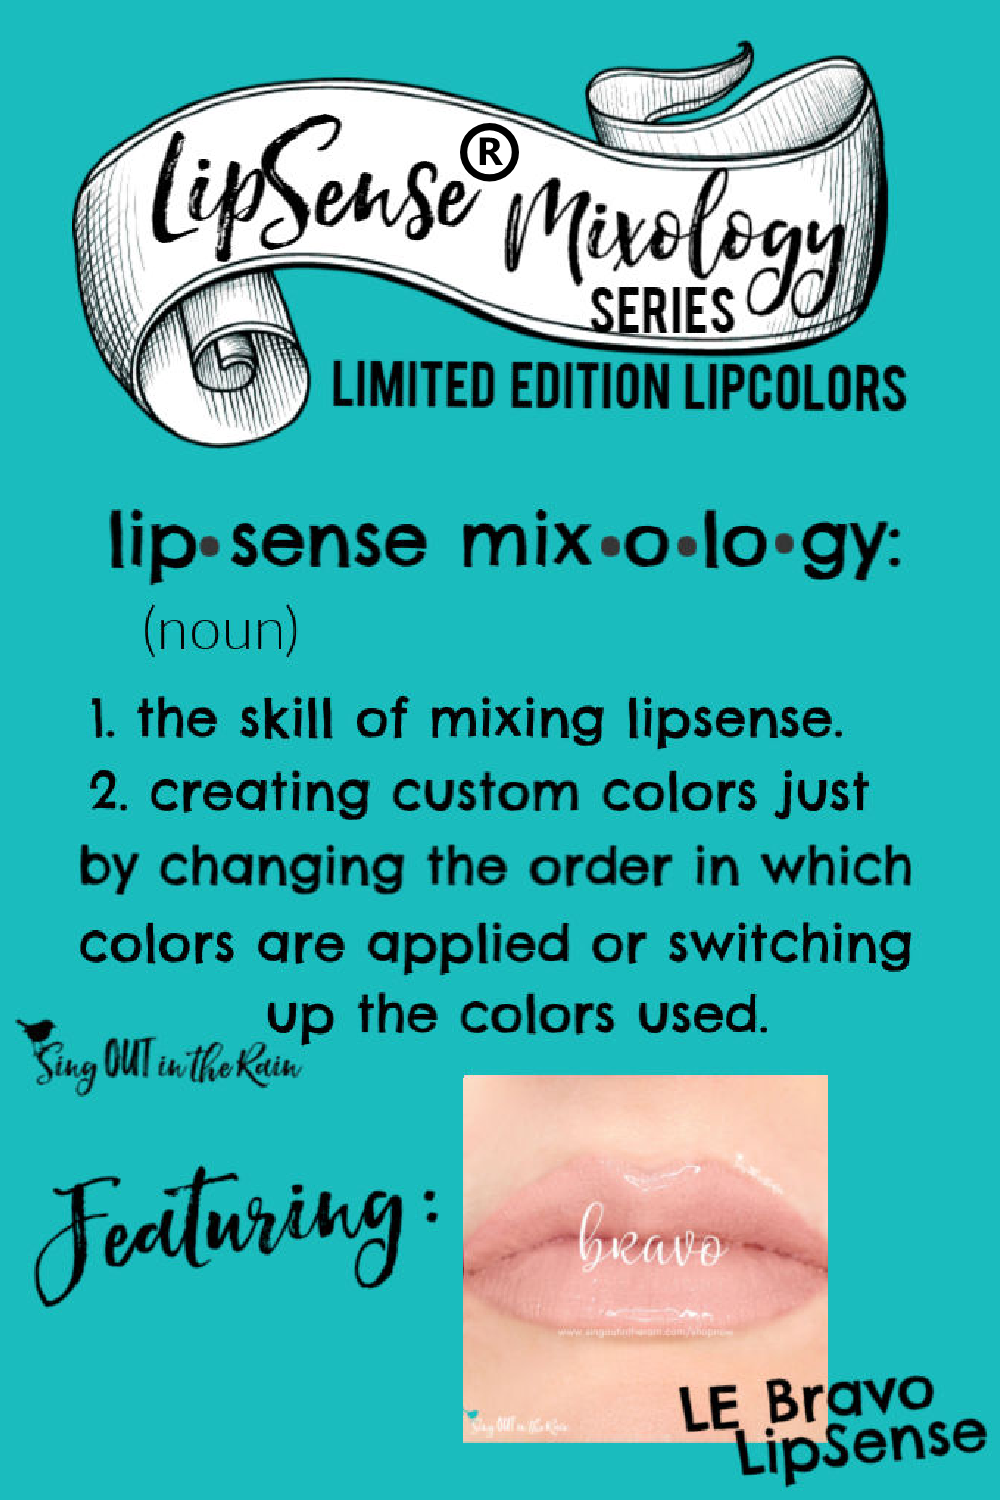 The Ultimate Guide to Bravo LipSense Mixology